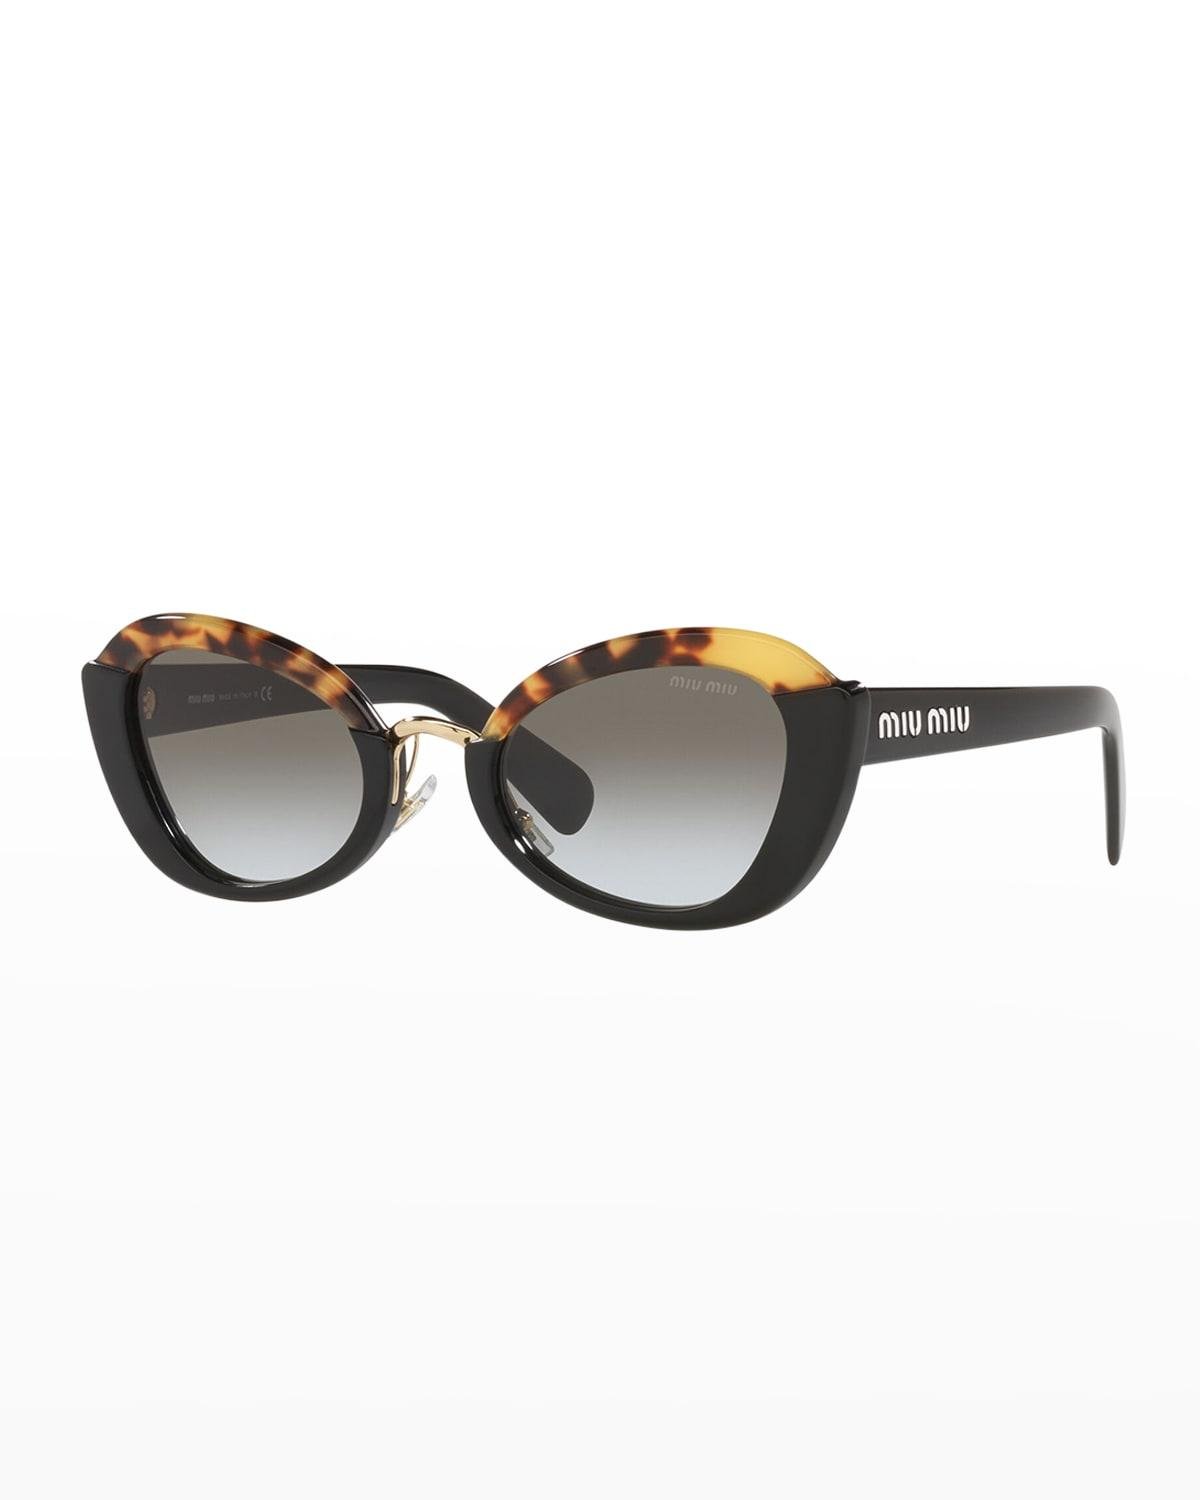 Men's Square Acetate Sunglasses by BURBERRY